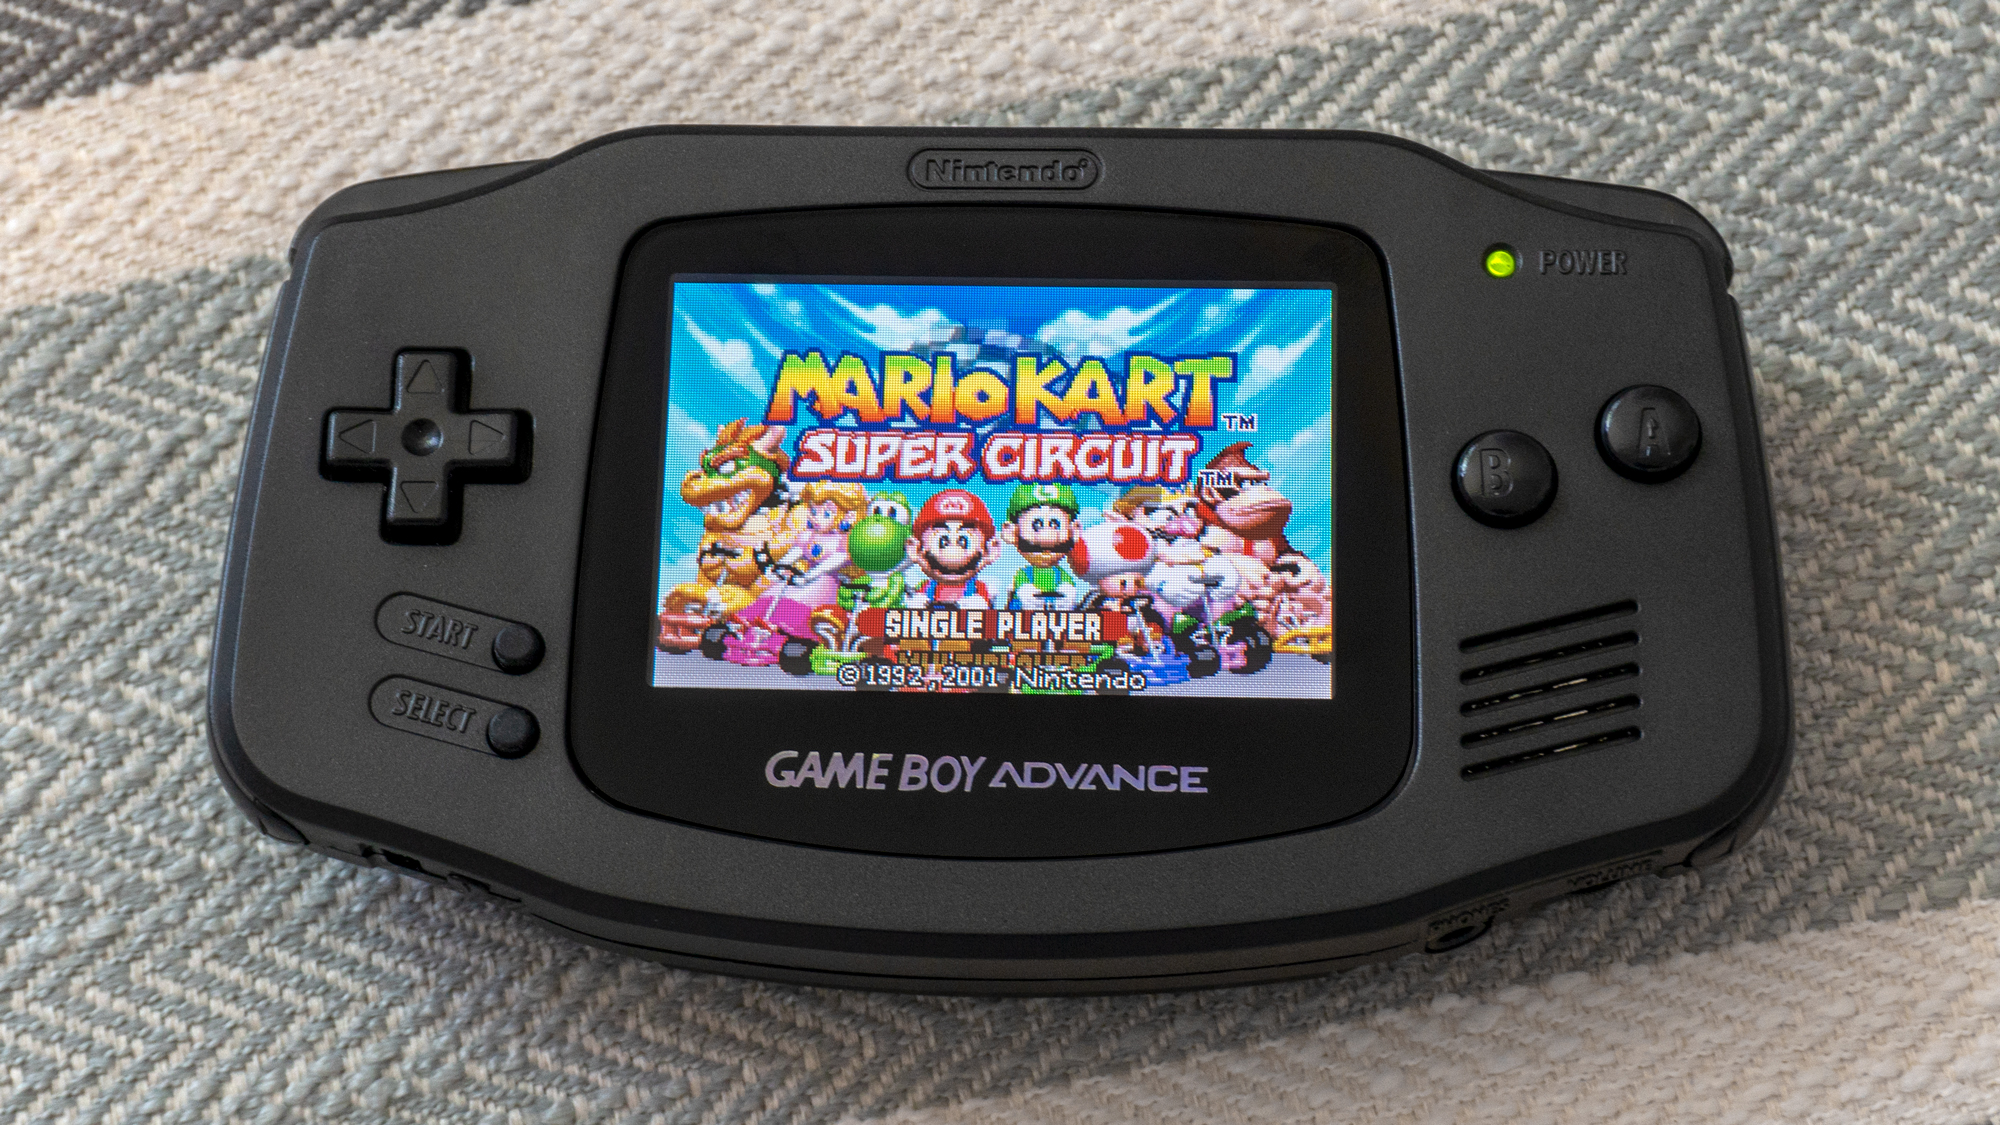 A custom Game Boy Advance created by Retro Modding. (Photo: Andrew Liszewski/Gizmodo)